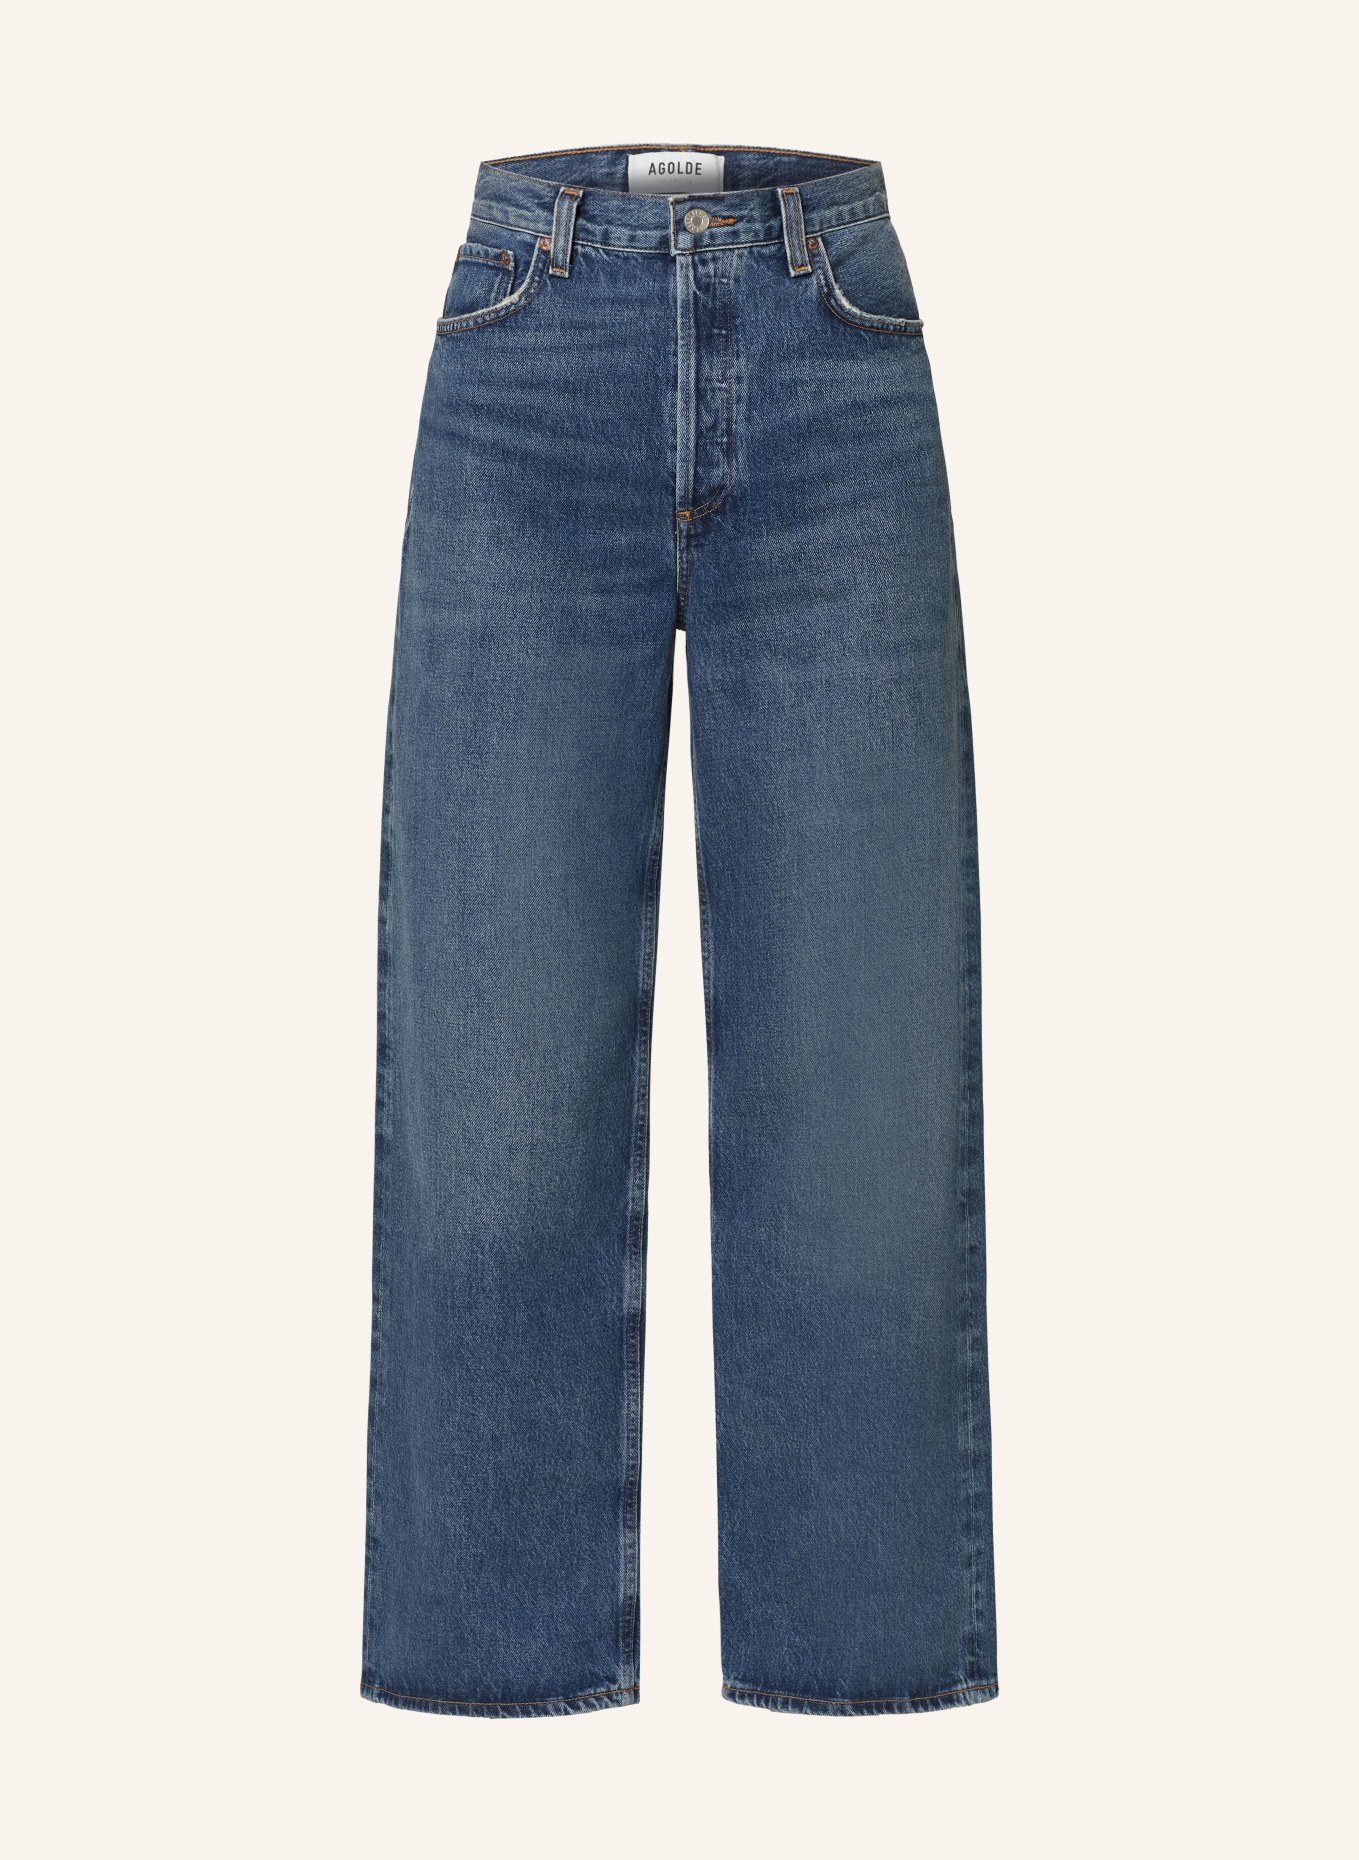 AGOLDE Straight Jeans, Farbe: image image (Bild 1)